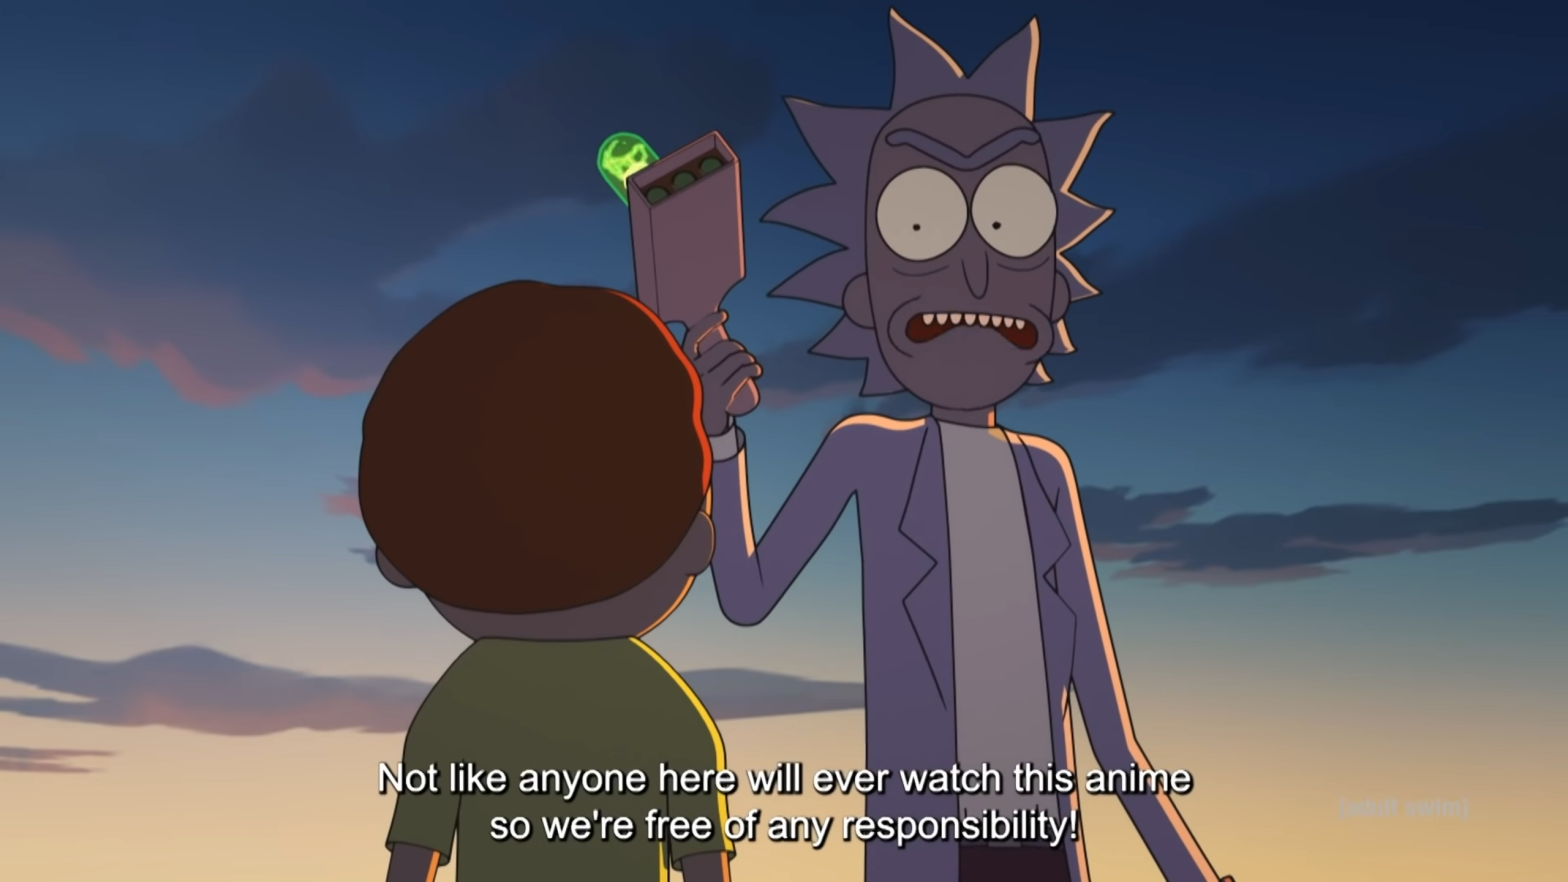 Jokes on you Rick, anime nerds will watch anything! (Screenshot: Adult Swim)